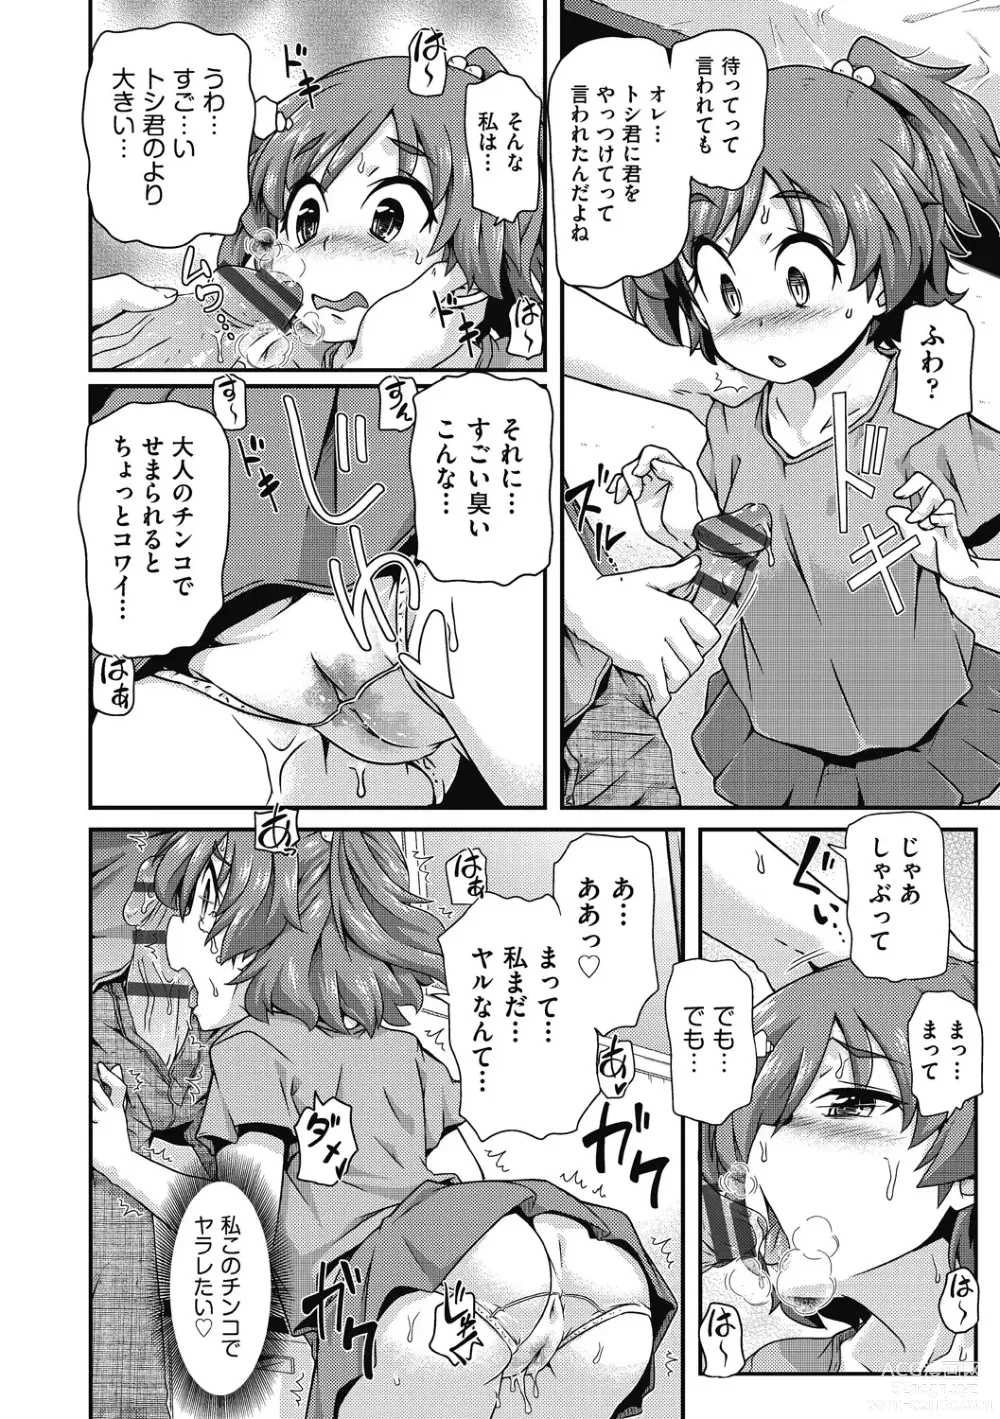 Page 10 of manga Chiisame Vacance